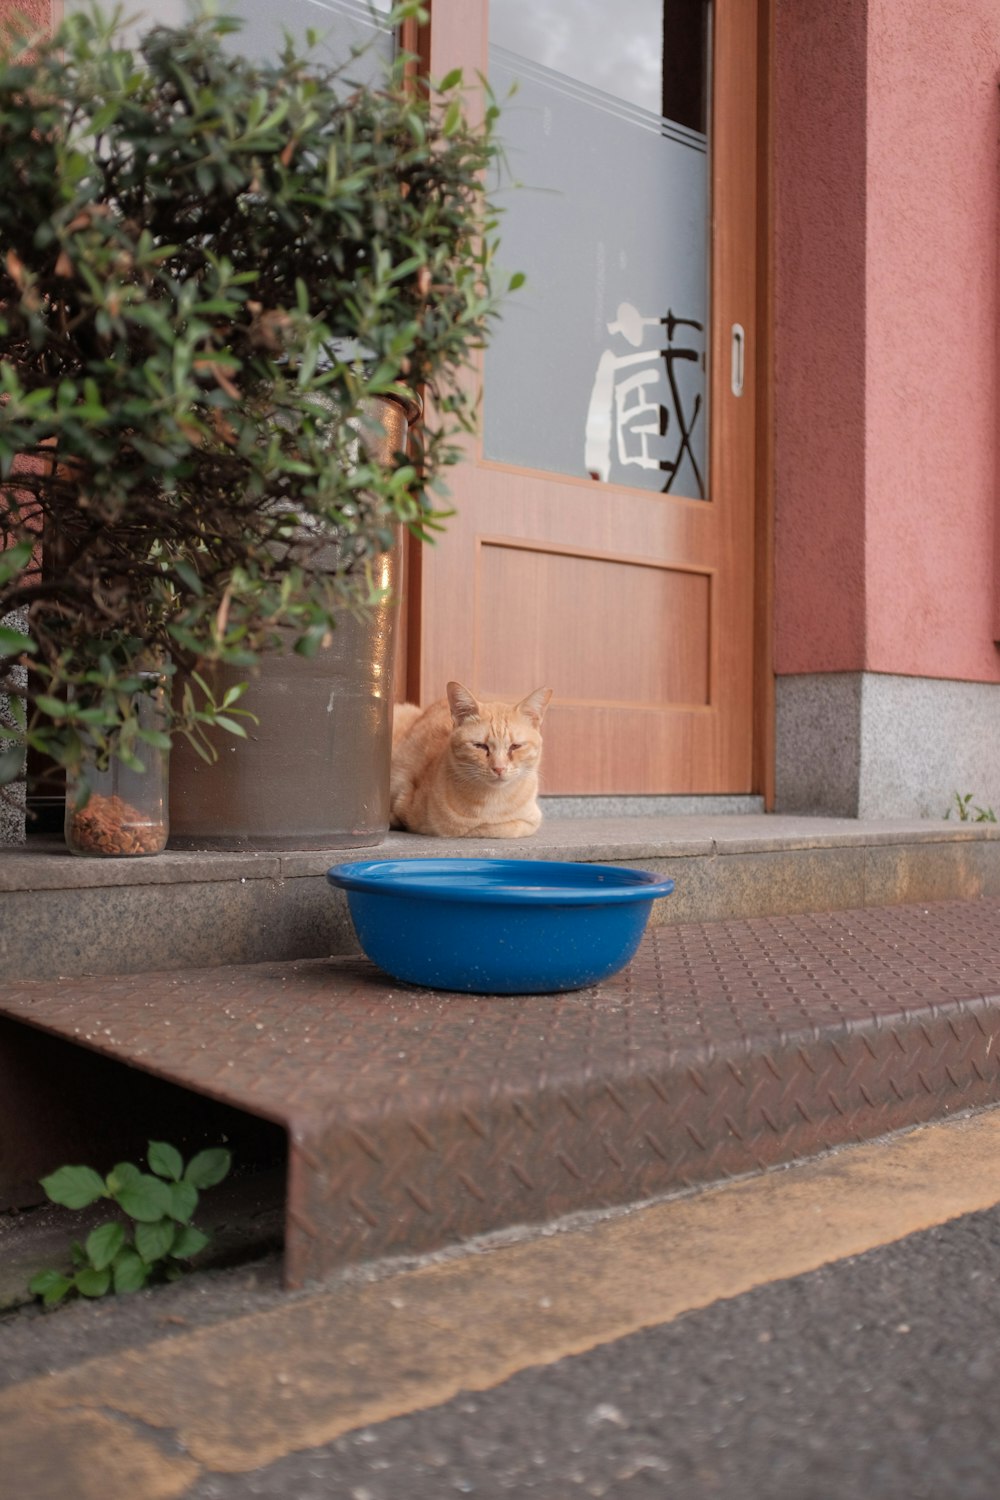 orange tabby cat on blue plastic bowl